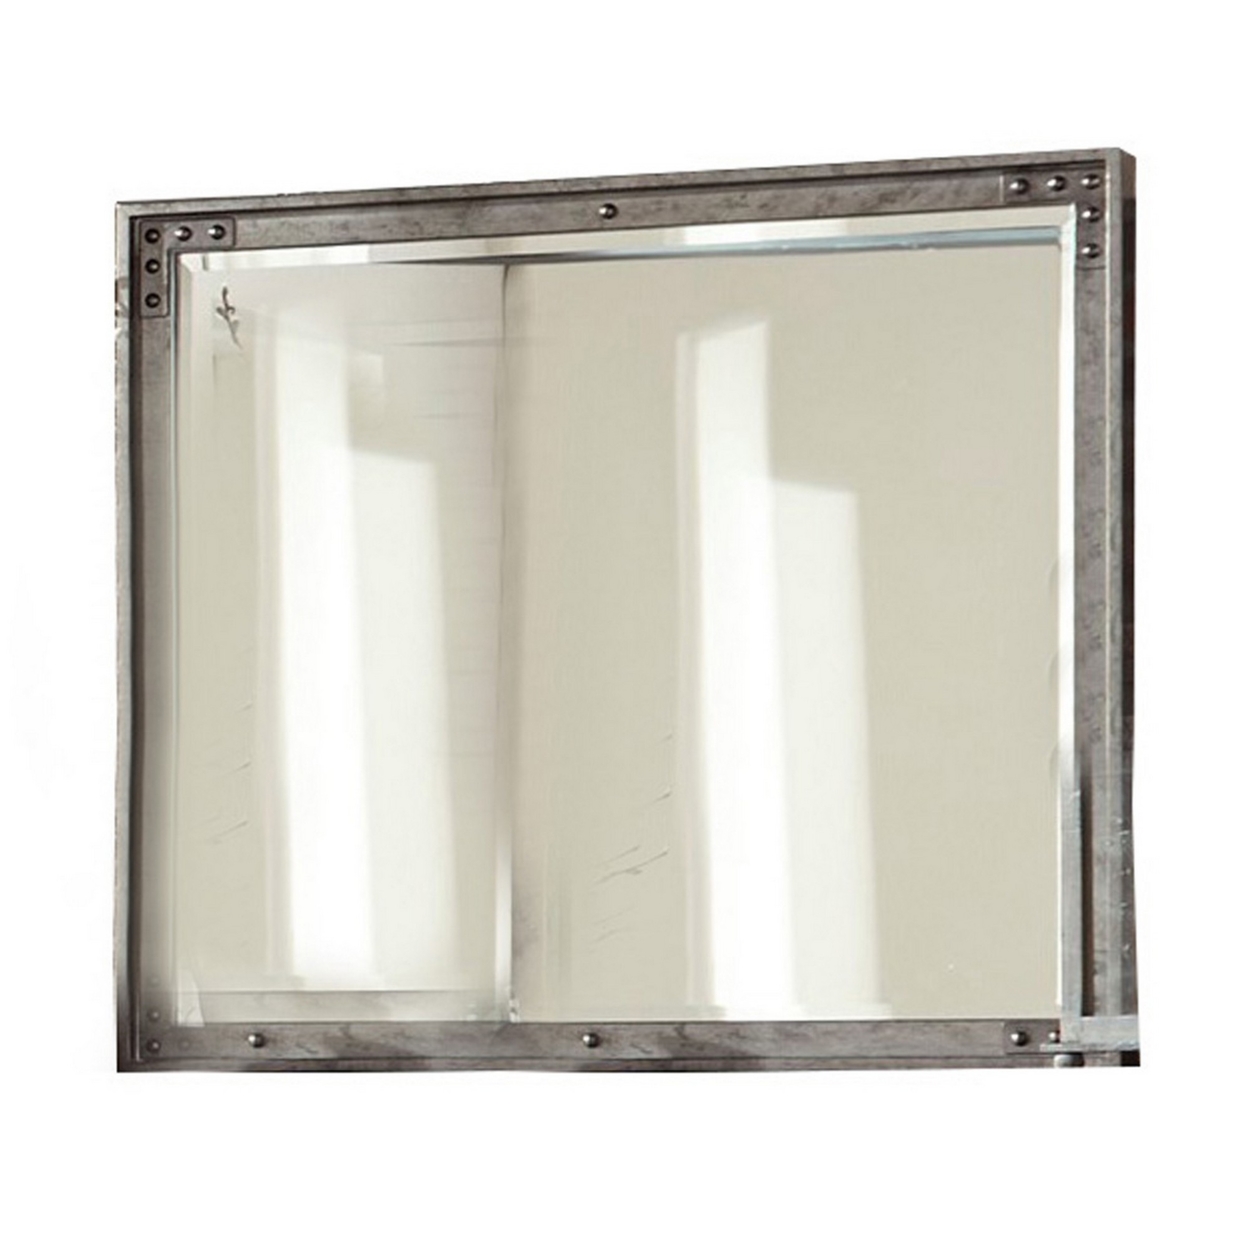 Industrial Style Wooden Dresser Mirror With Nail Accents, Gunmetal Brown- Saltoro Sherpi